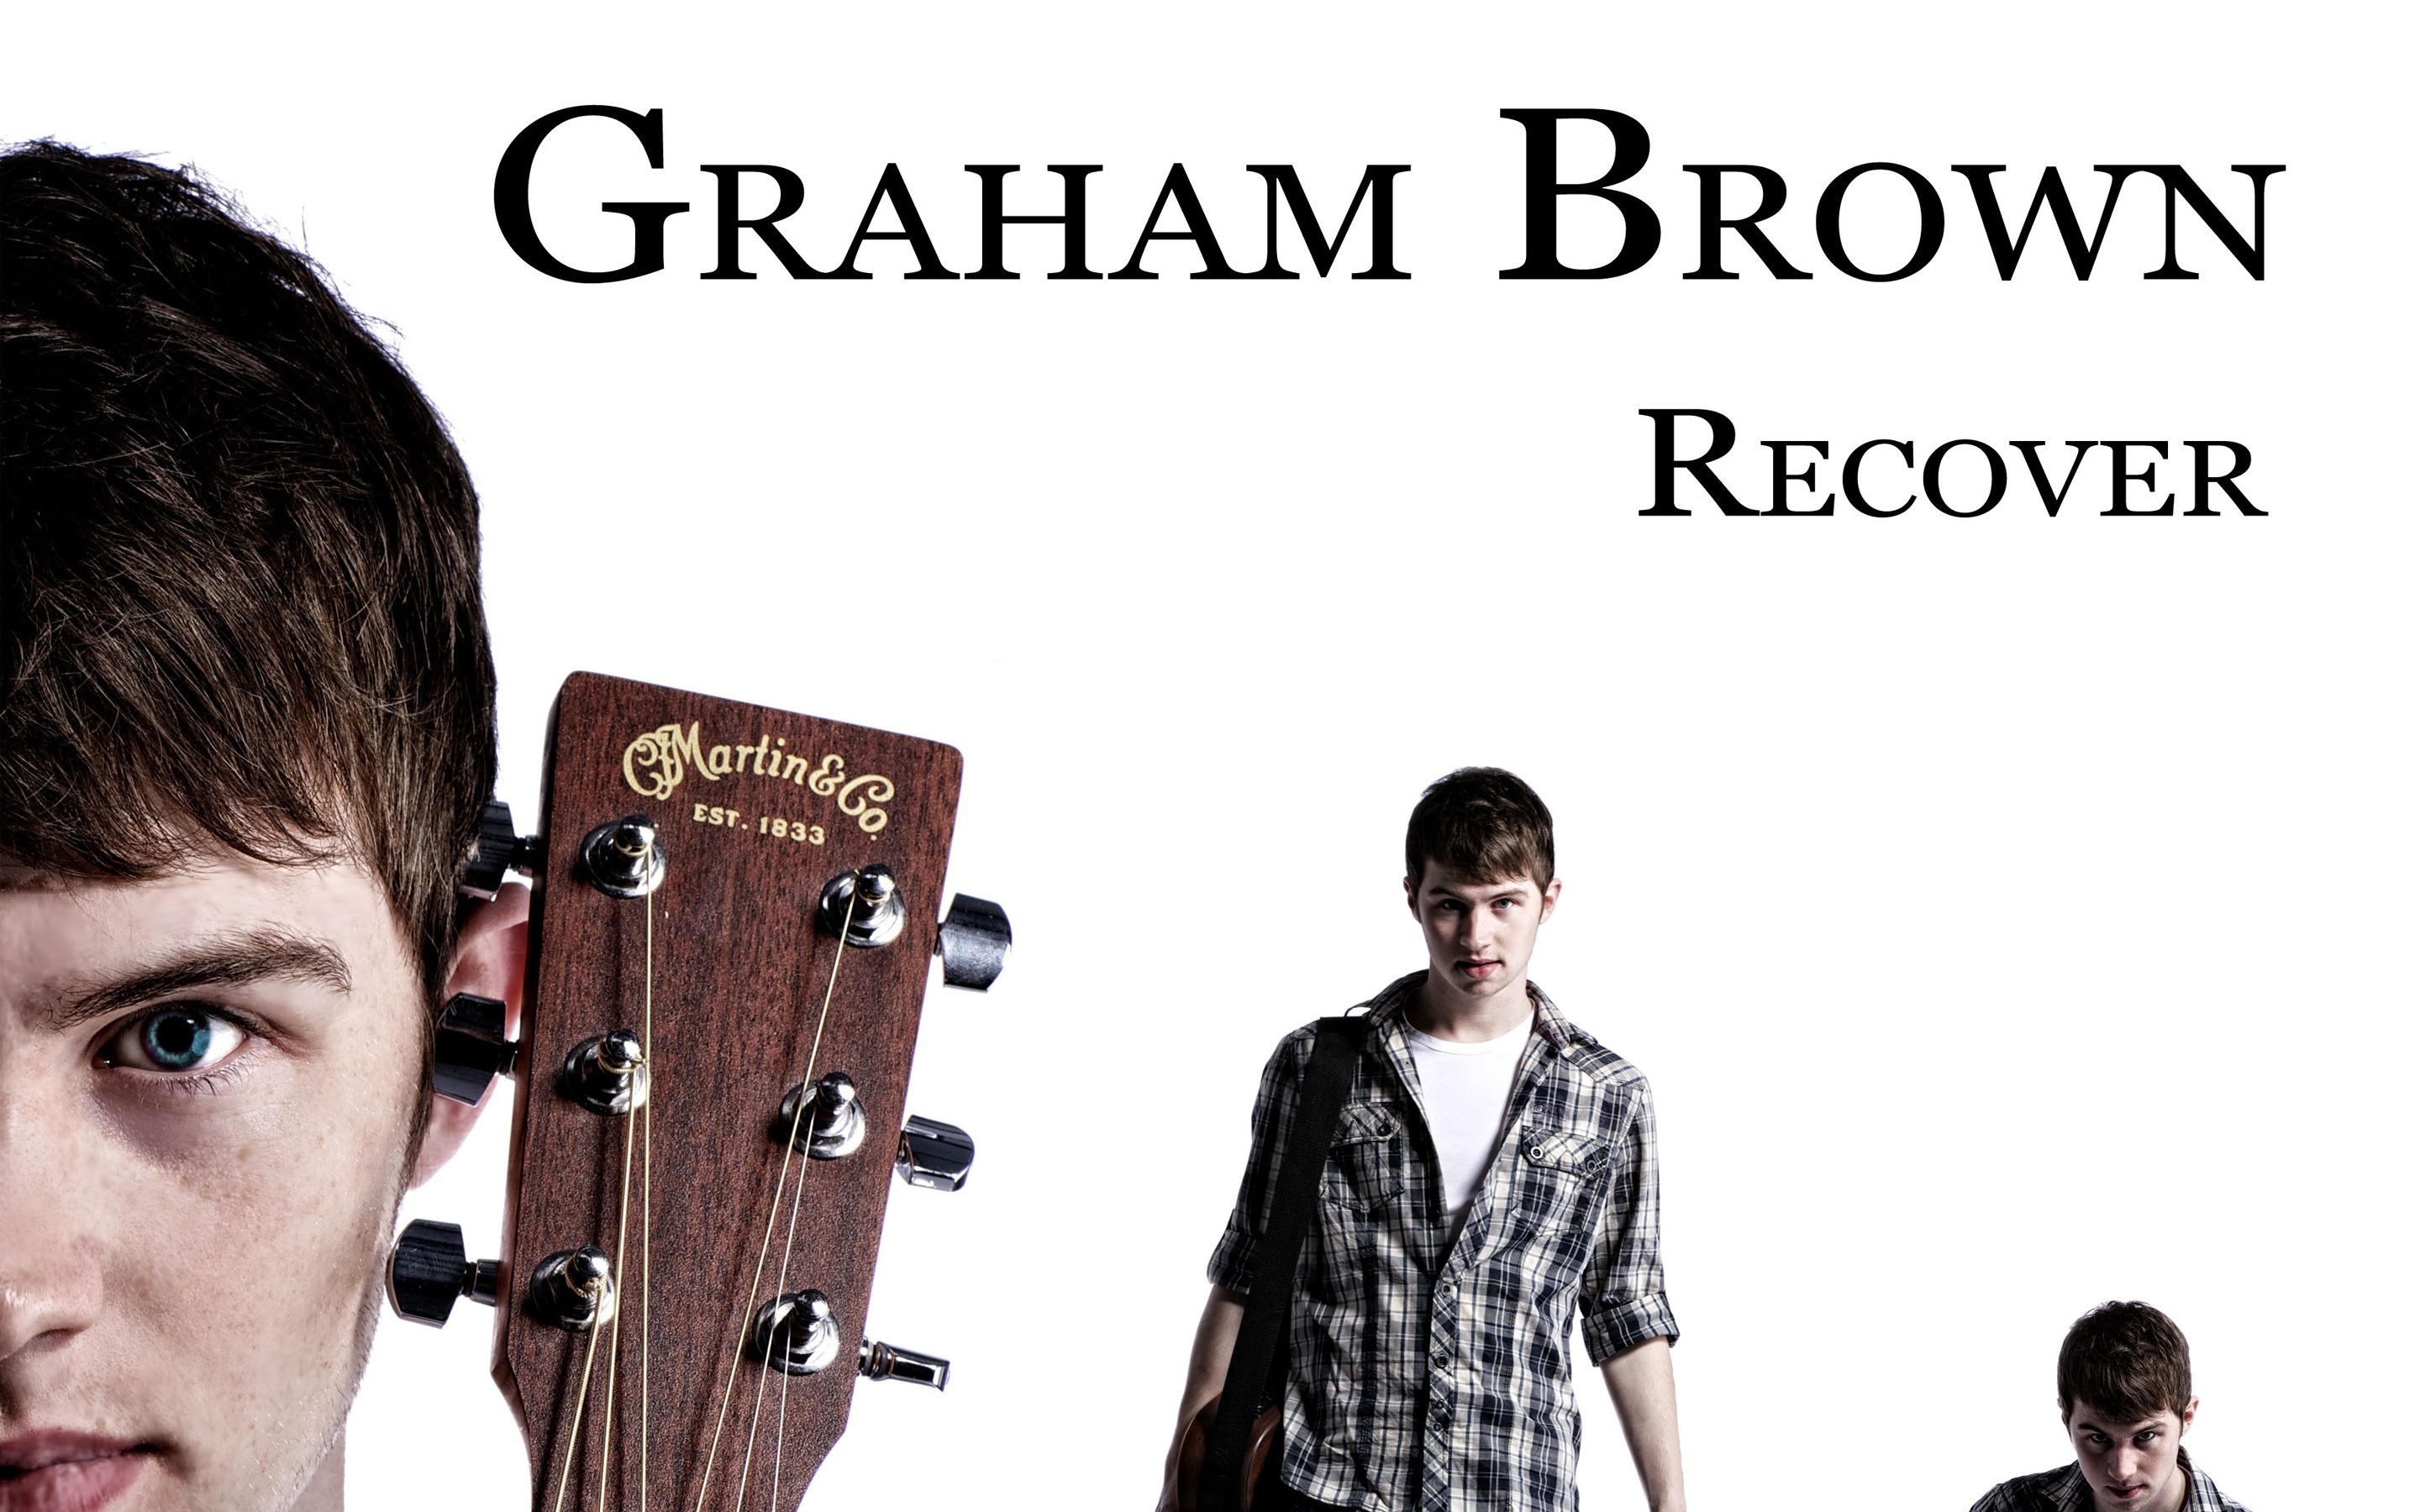 Graham Brown Band for 2880 x 1800 Retina Display resolution